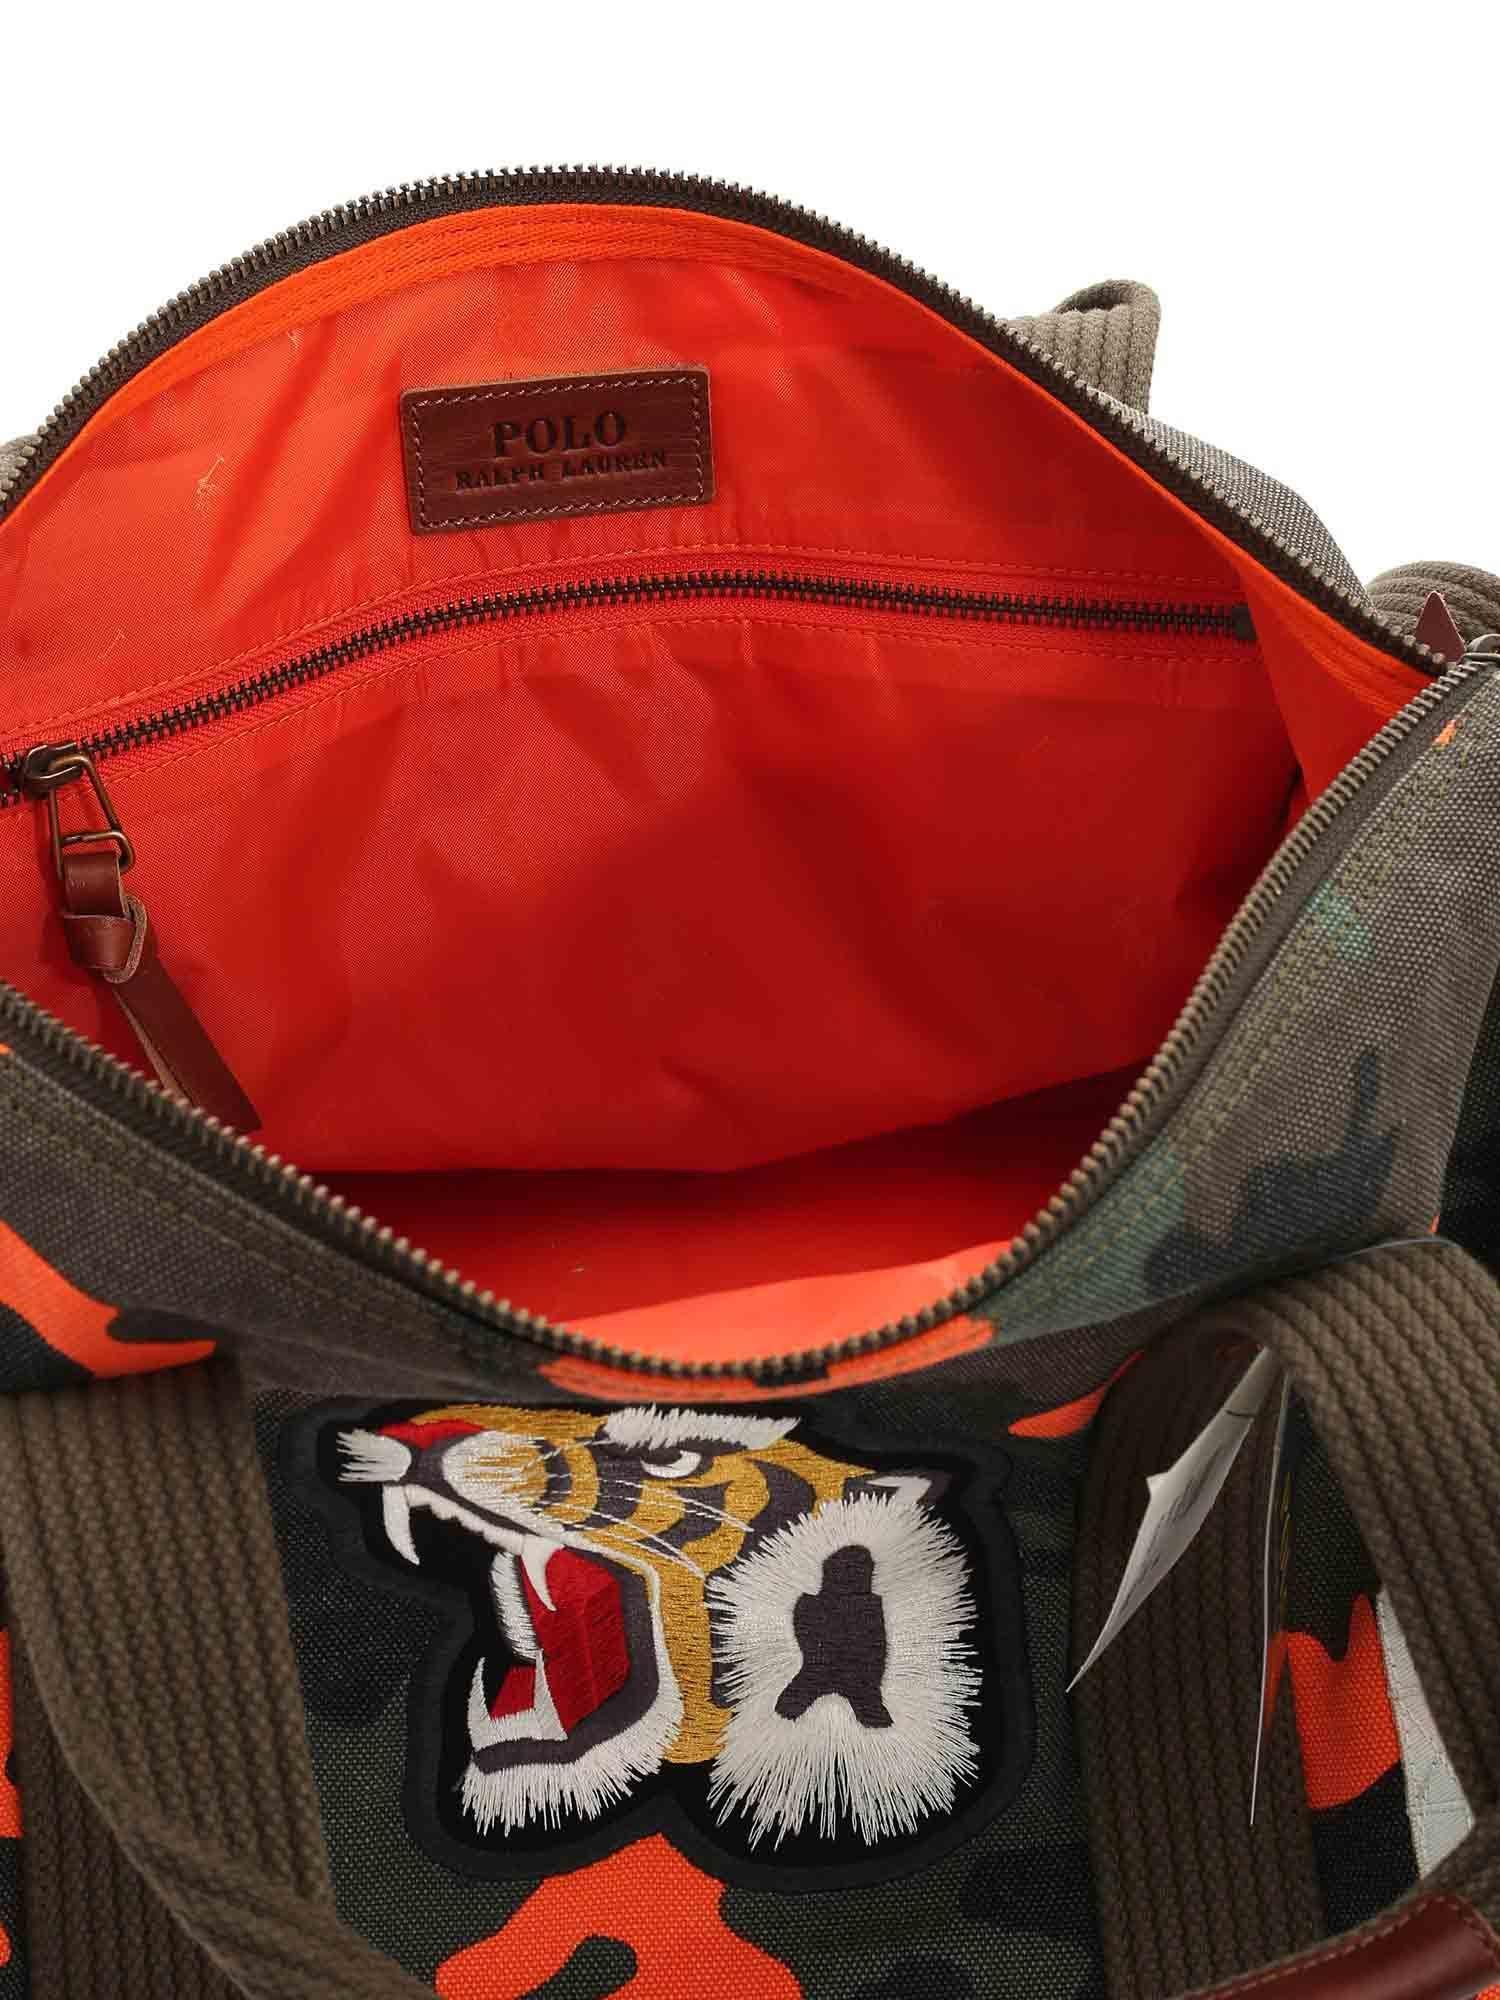 Polo Ralph Lauren Tiger Appliqué Duffel Bag for Men | Lyst